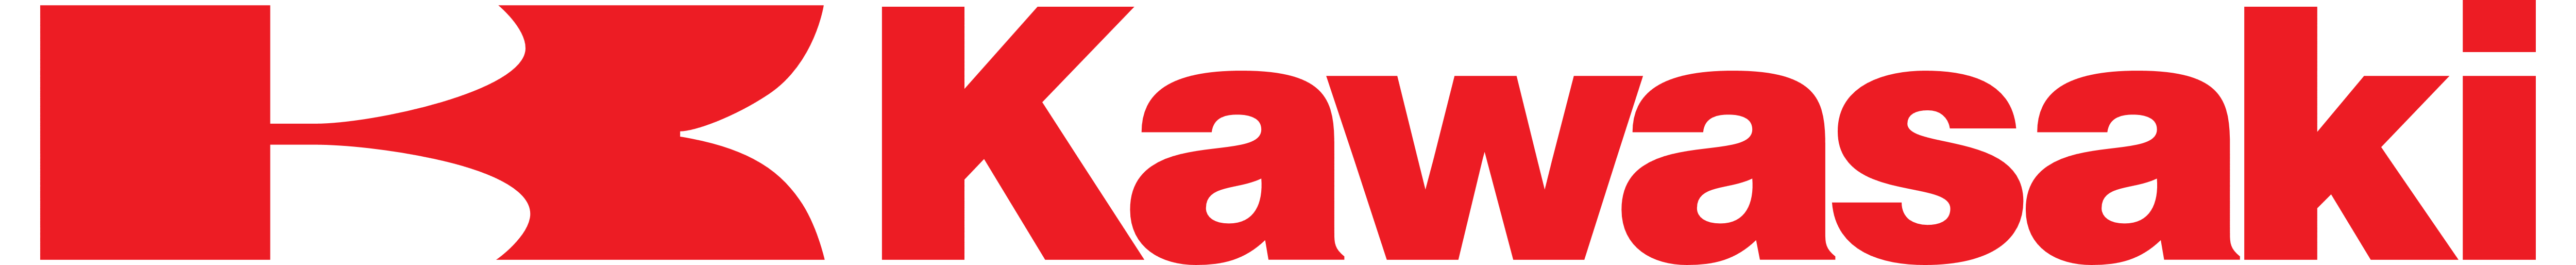 Kawasaki_logo_symbol